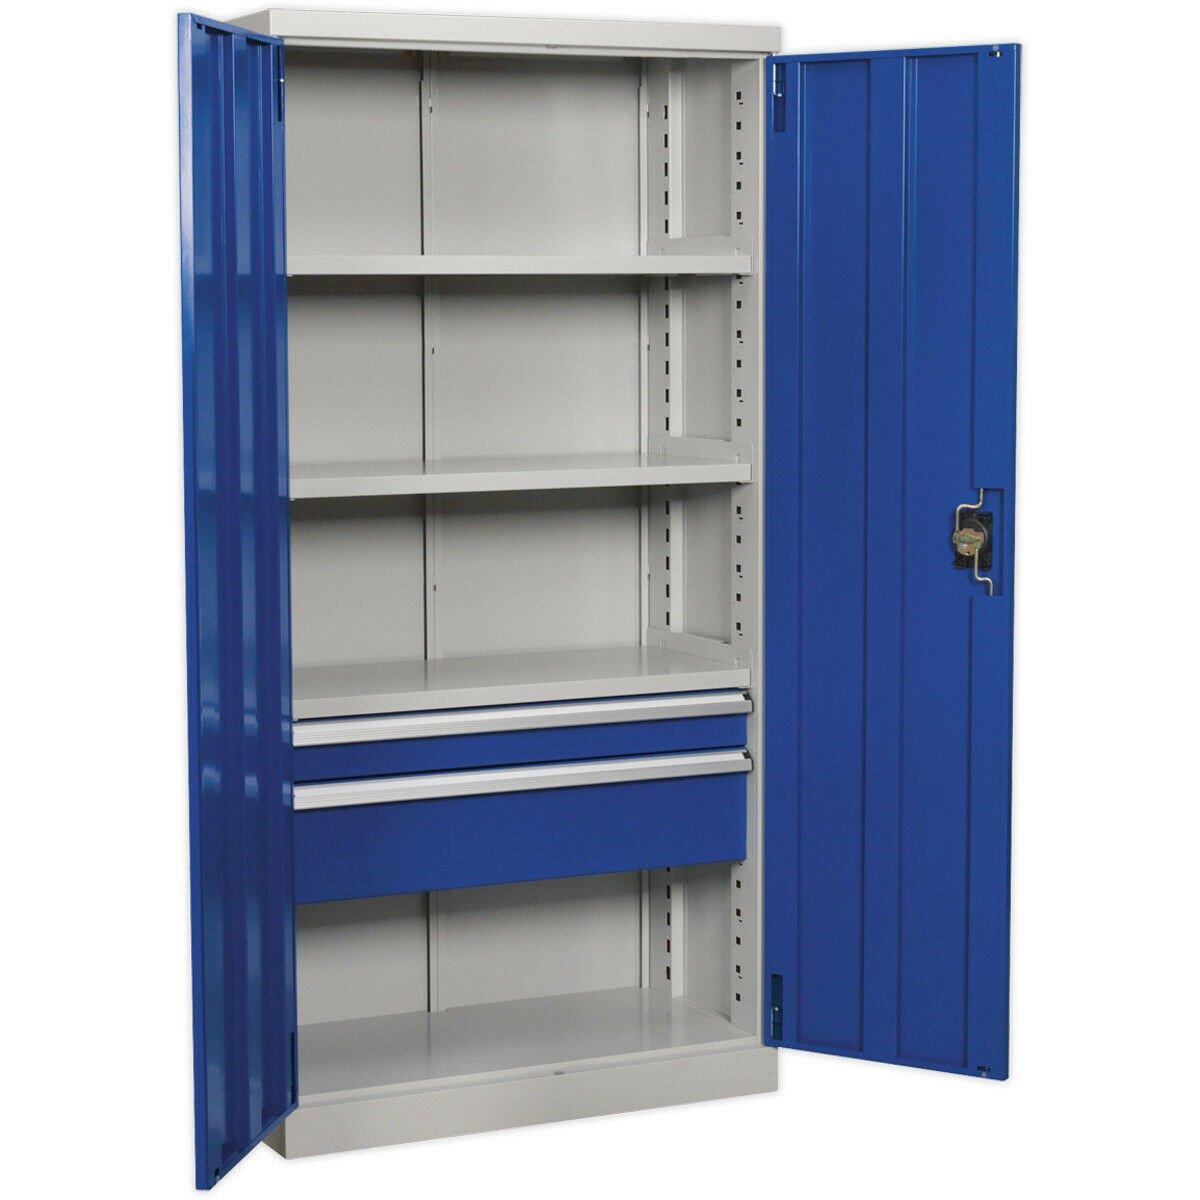 1800mm Double Door Industrial Cabinet - 2 Drawers & 3 Shelves - 3 Point Lock